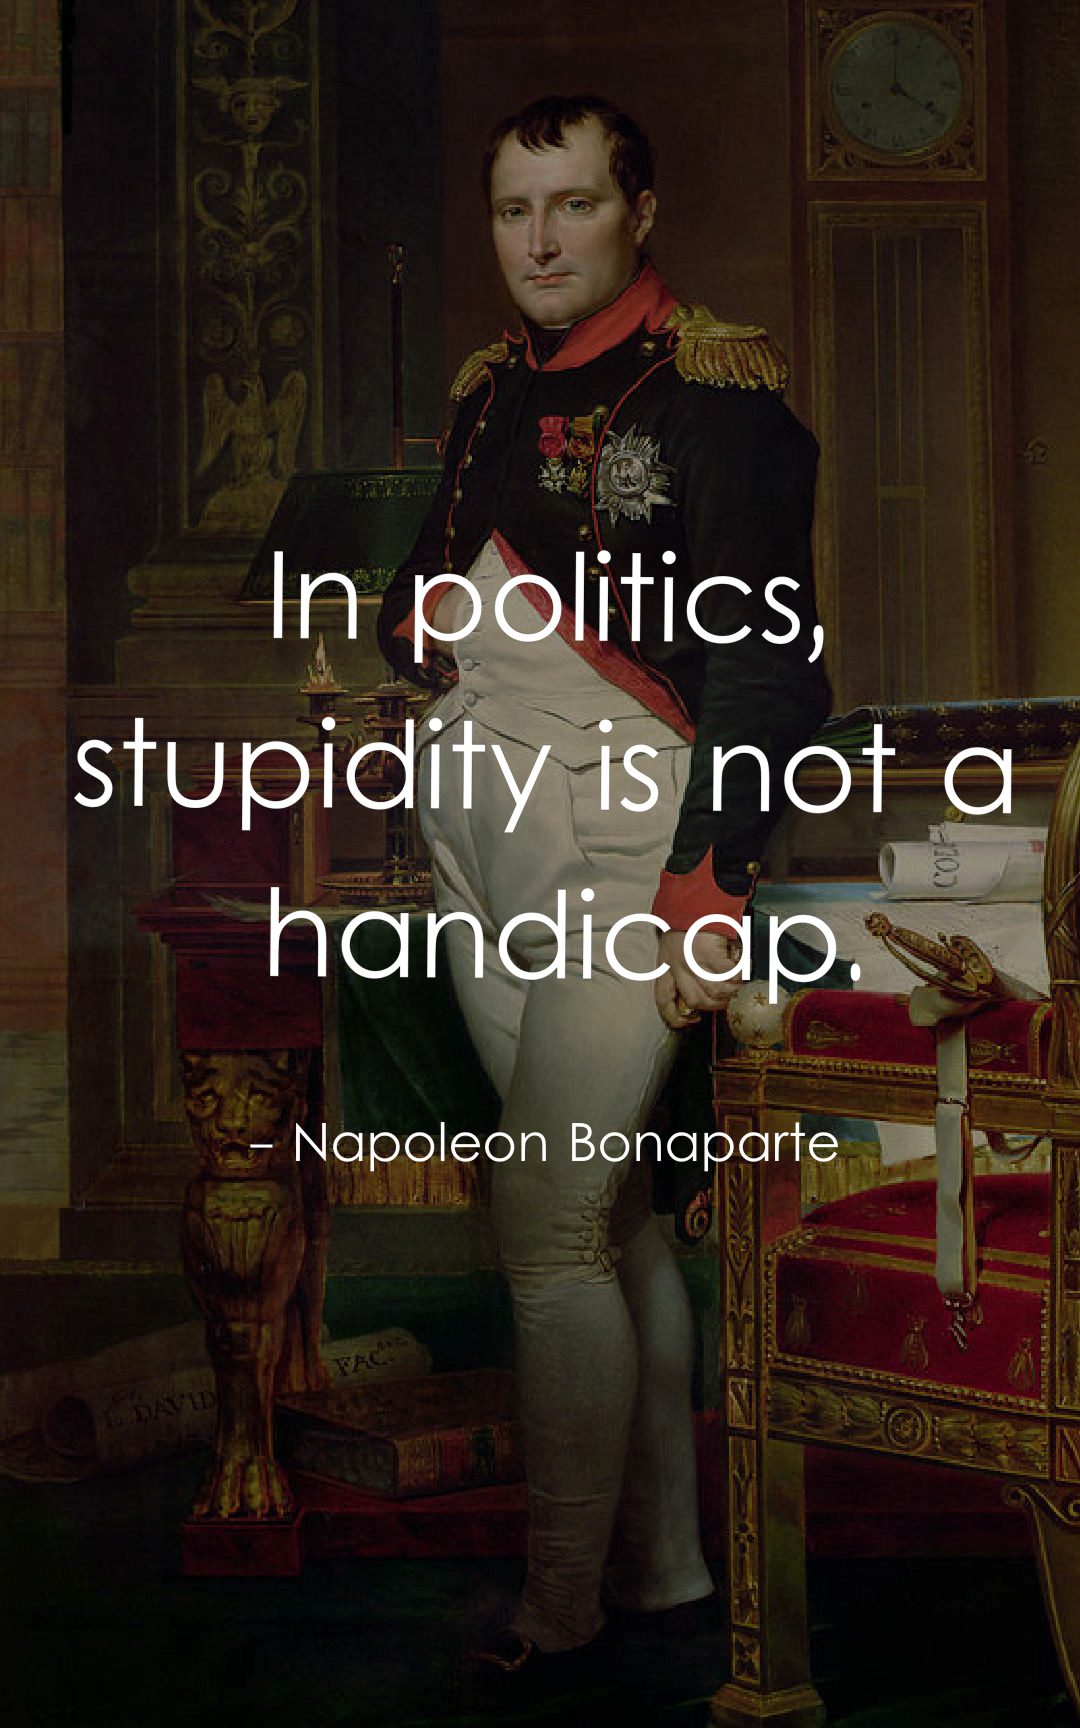 In politics, stupidity is not a handicap.